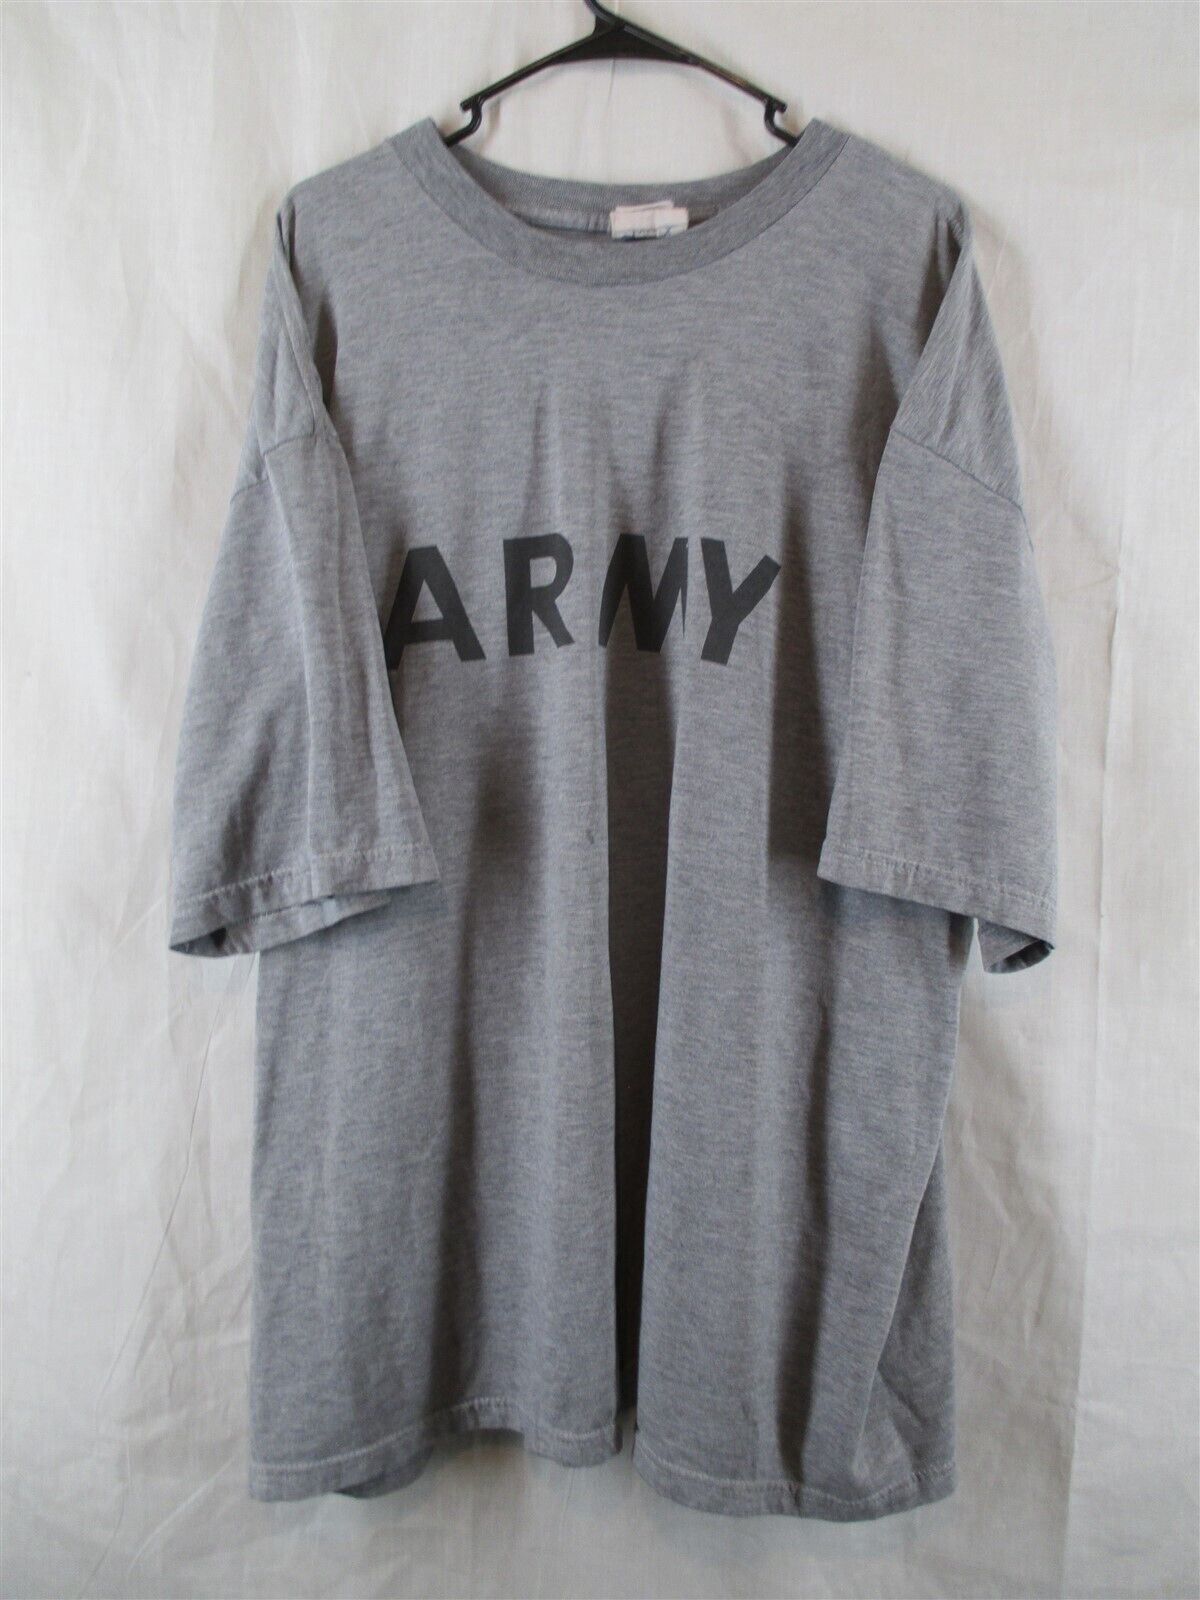 XX-Large T-Shirt Short Sleeve Army Gray IPFU Improved Physical Fitness PT USGI